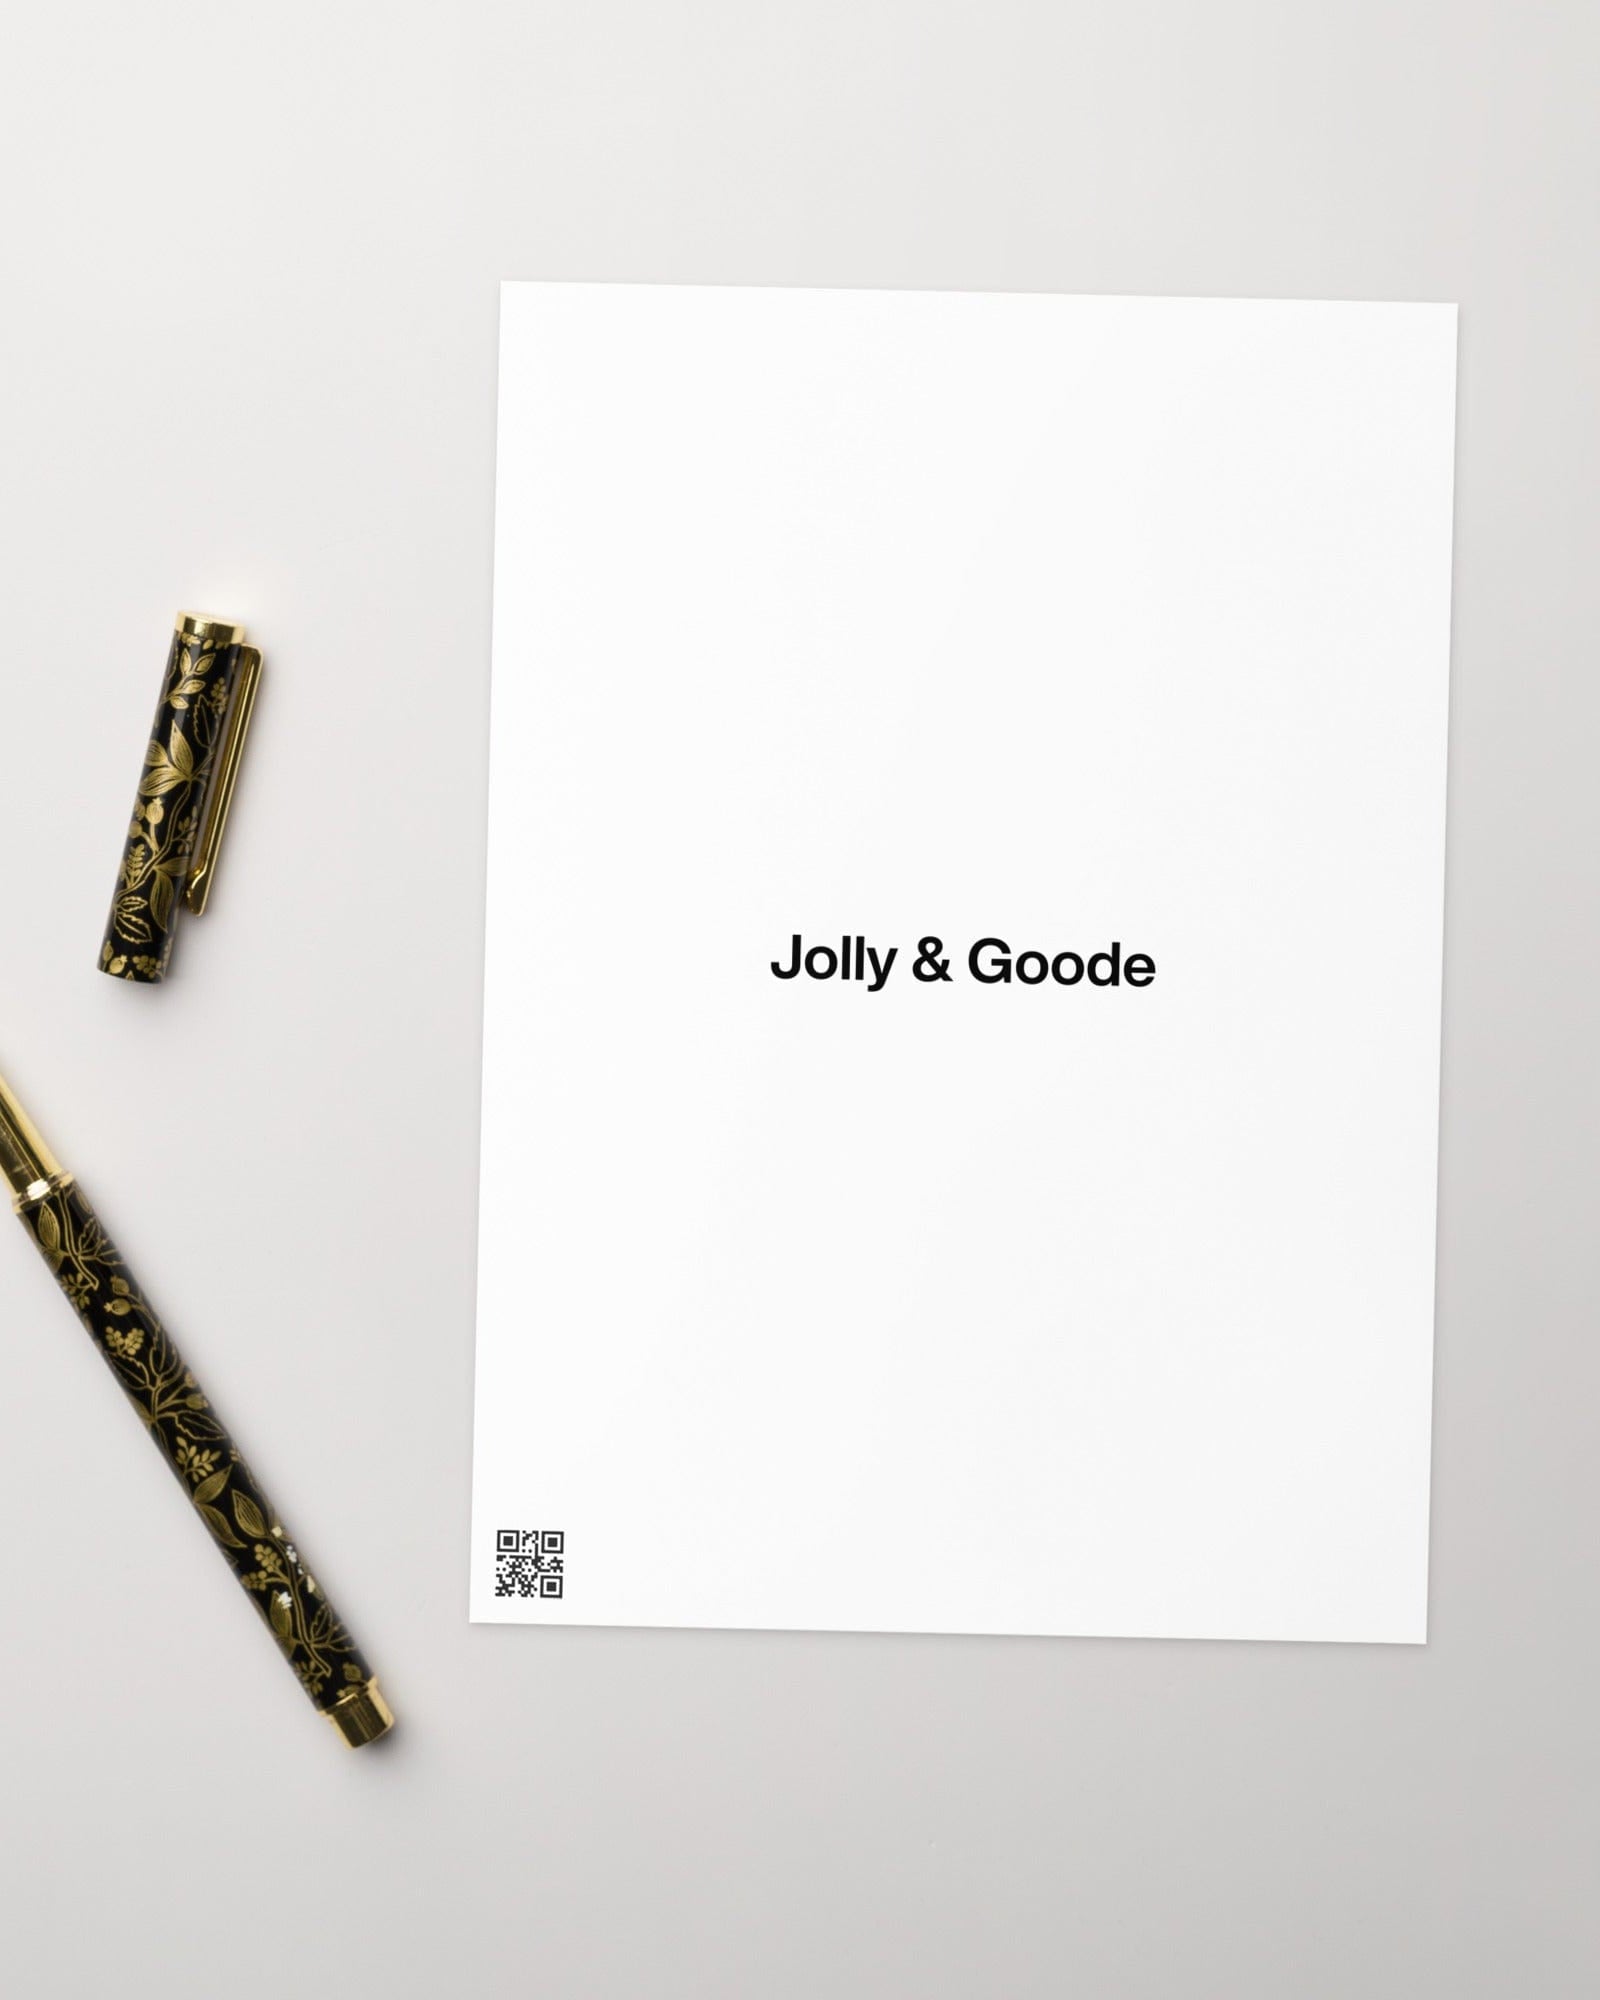 Greatish Britain Pillory Greeting Card Jolly & Goode